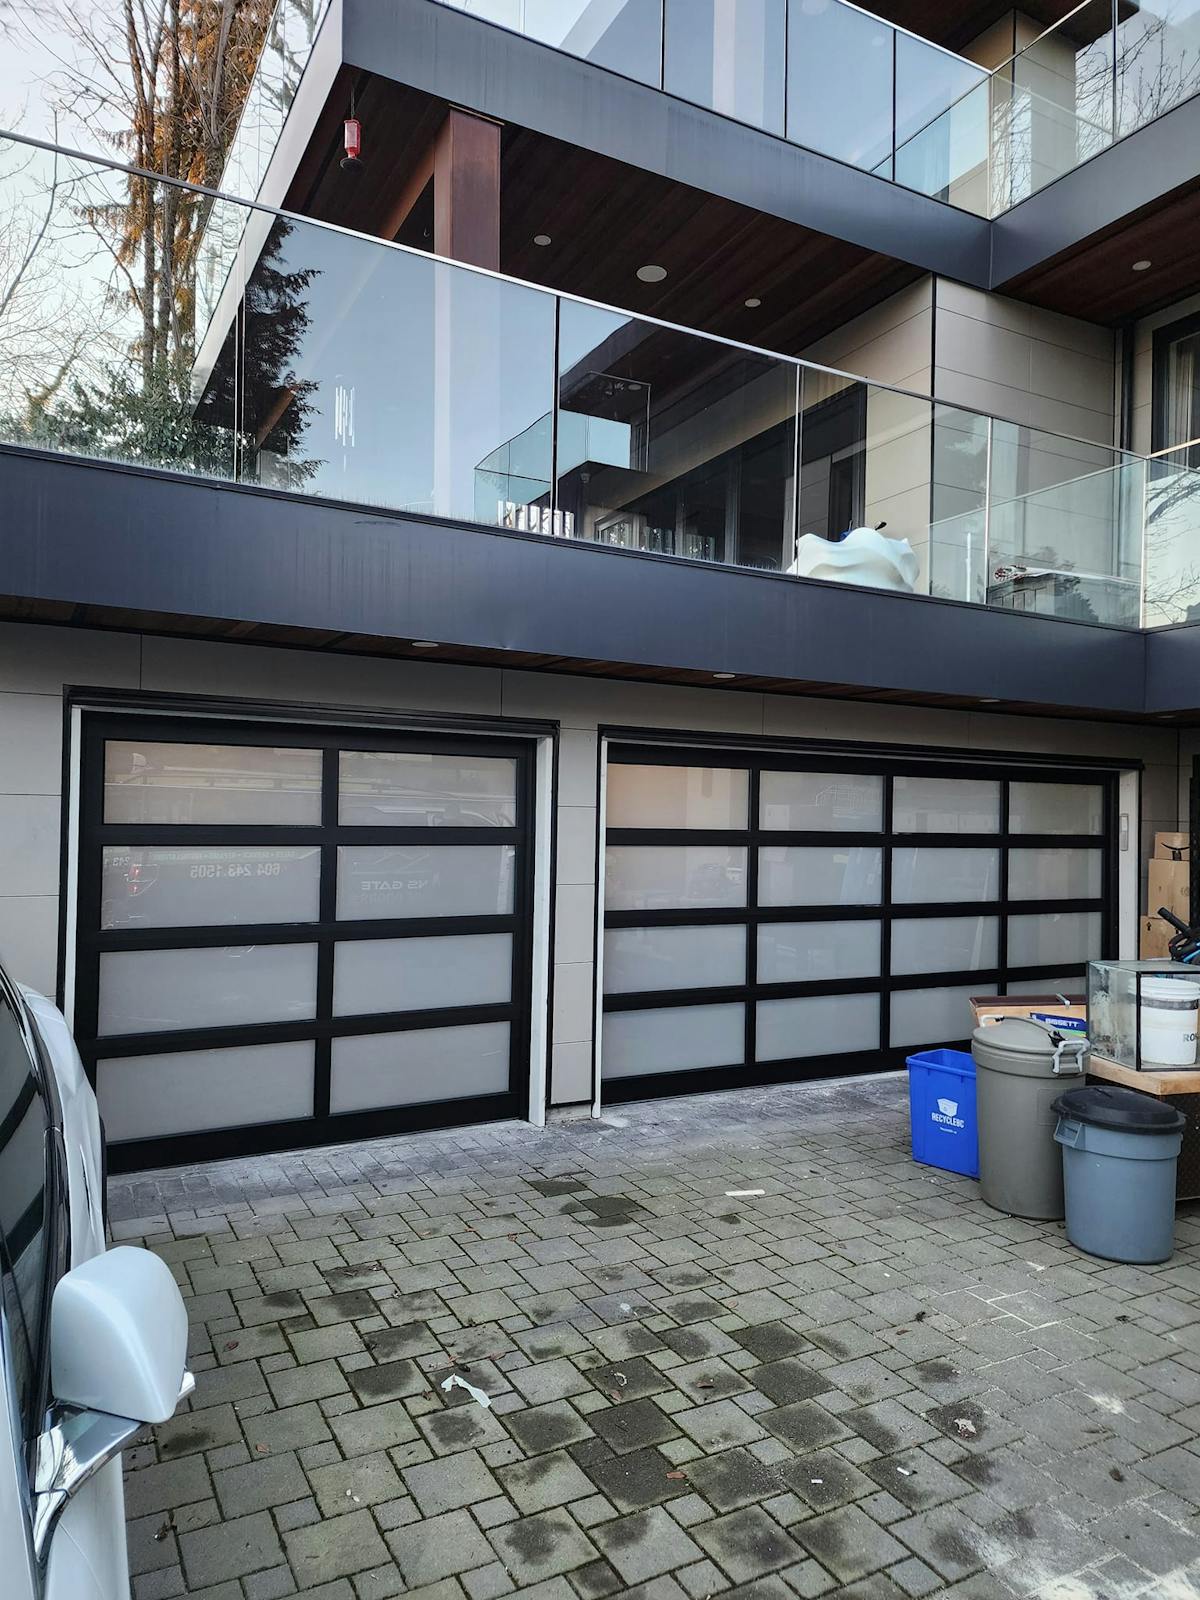 A pair of beautiful glass garage doors